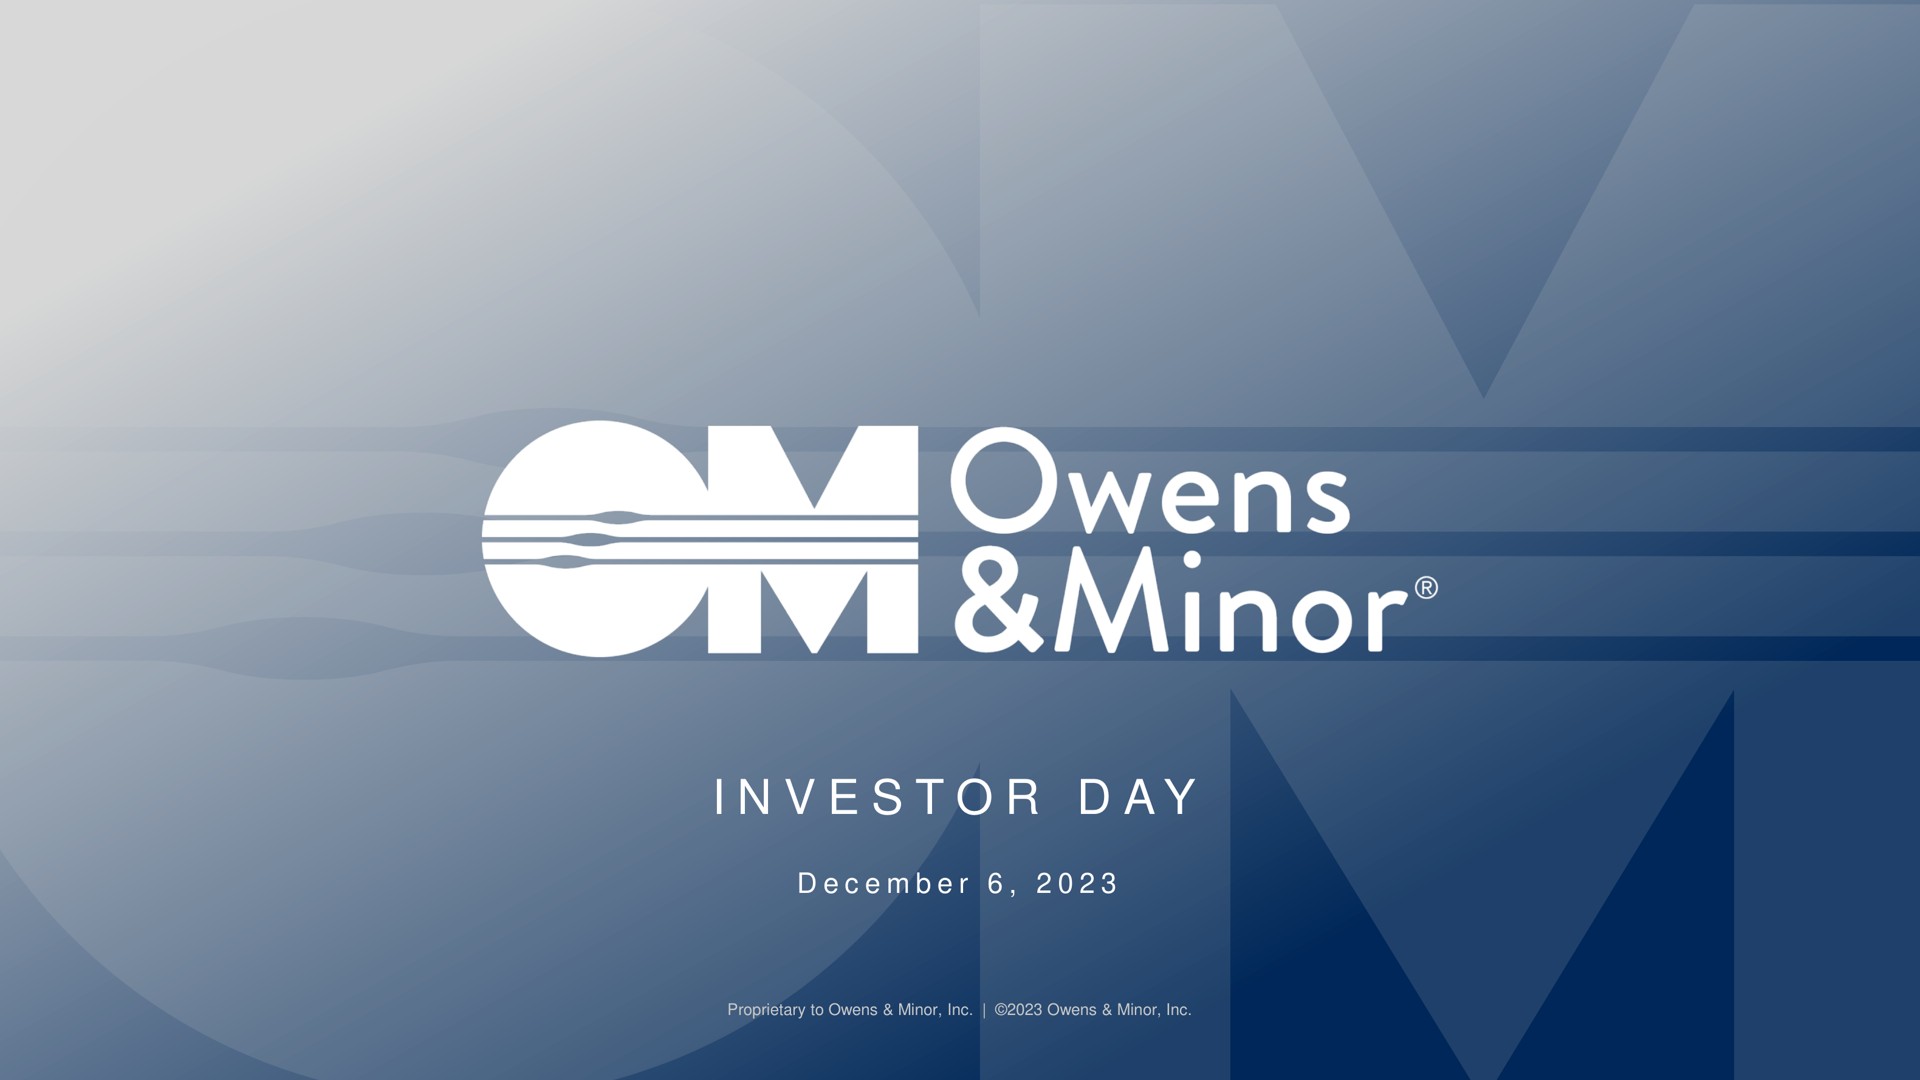 i a minor investor day | Owens&Minor